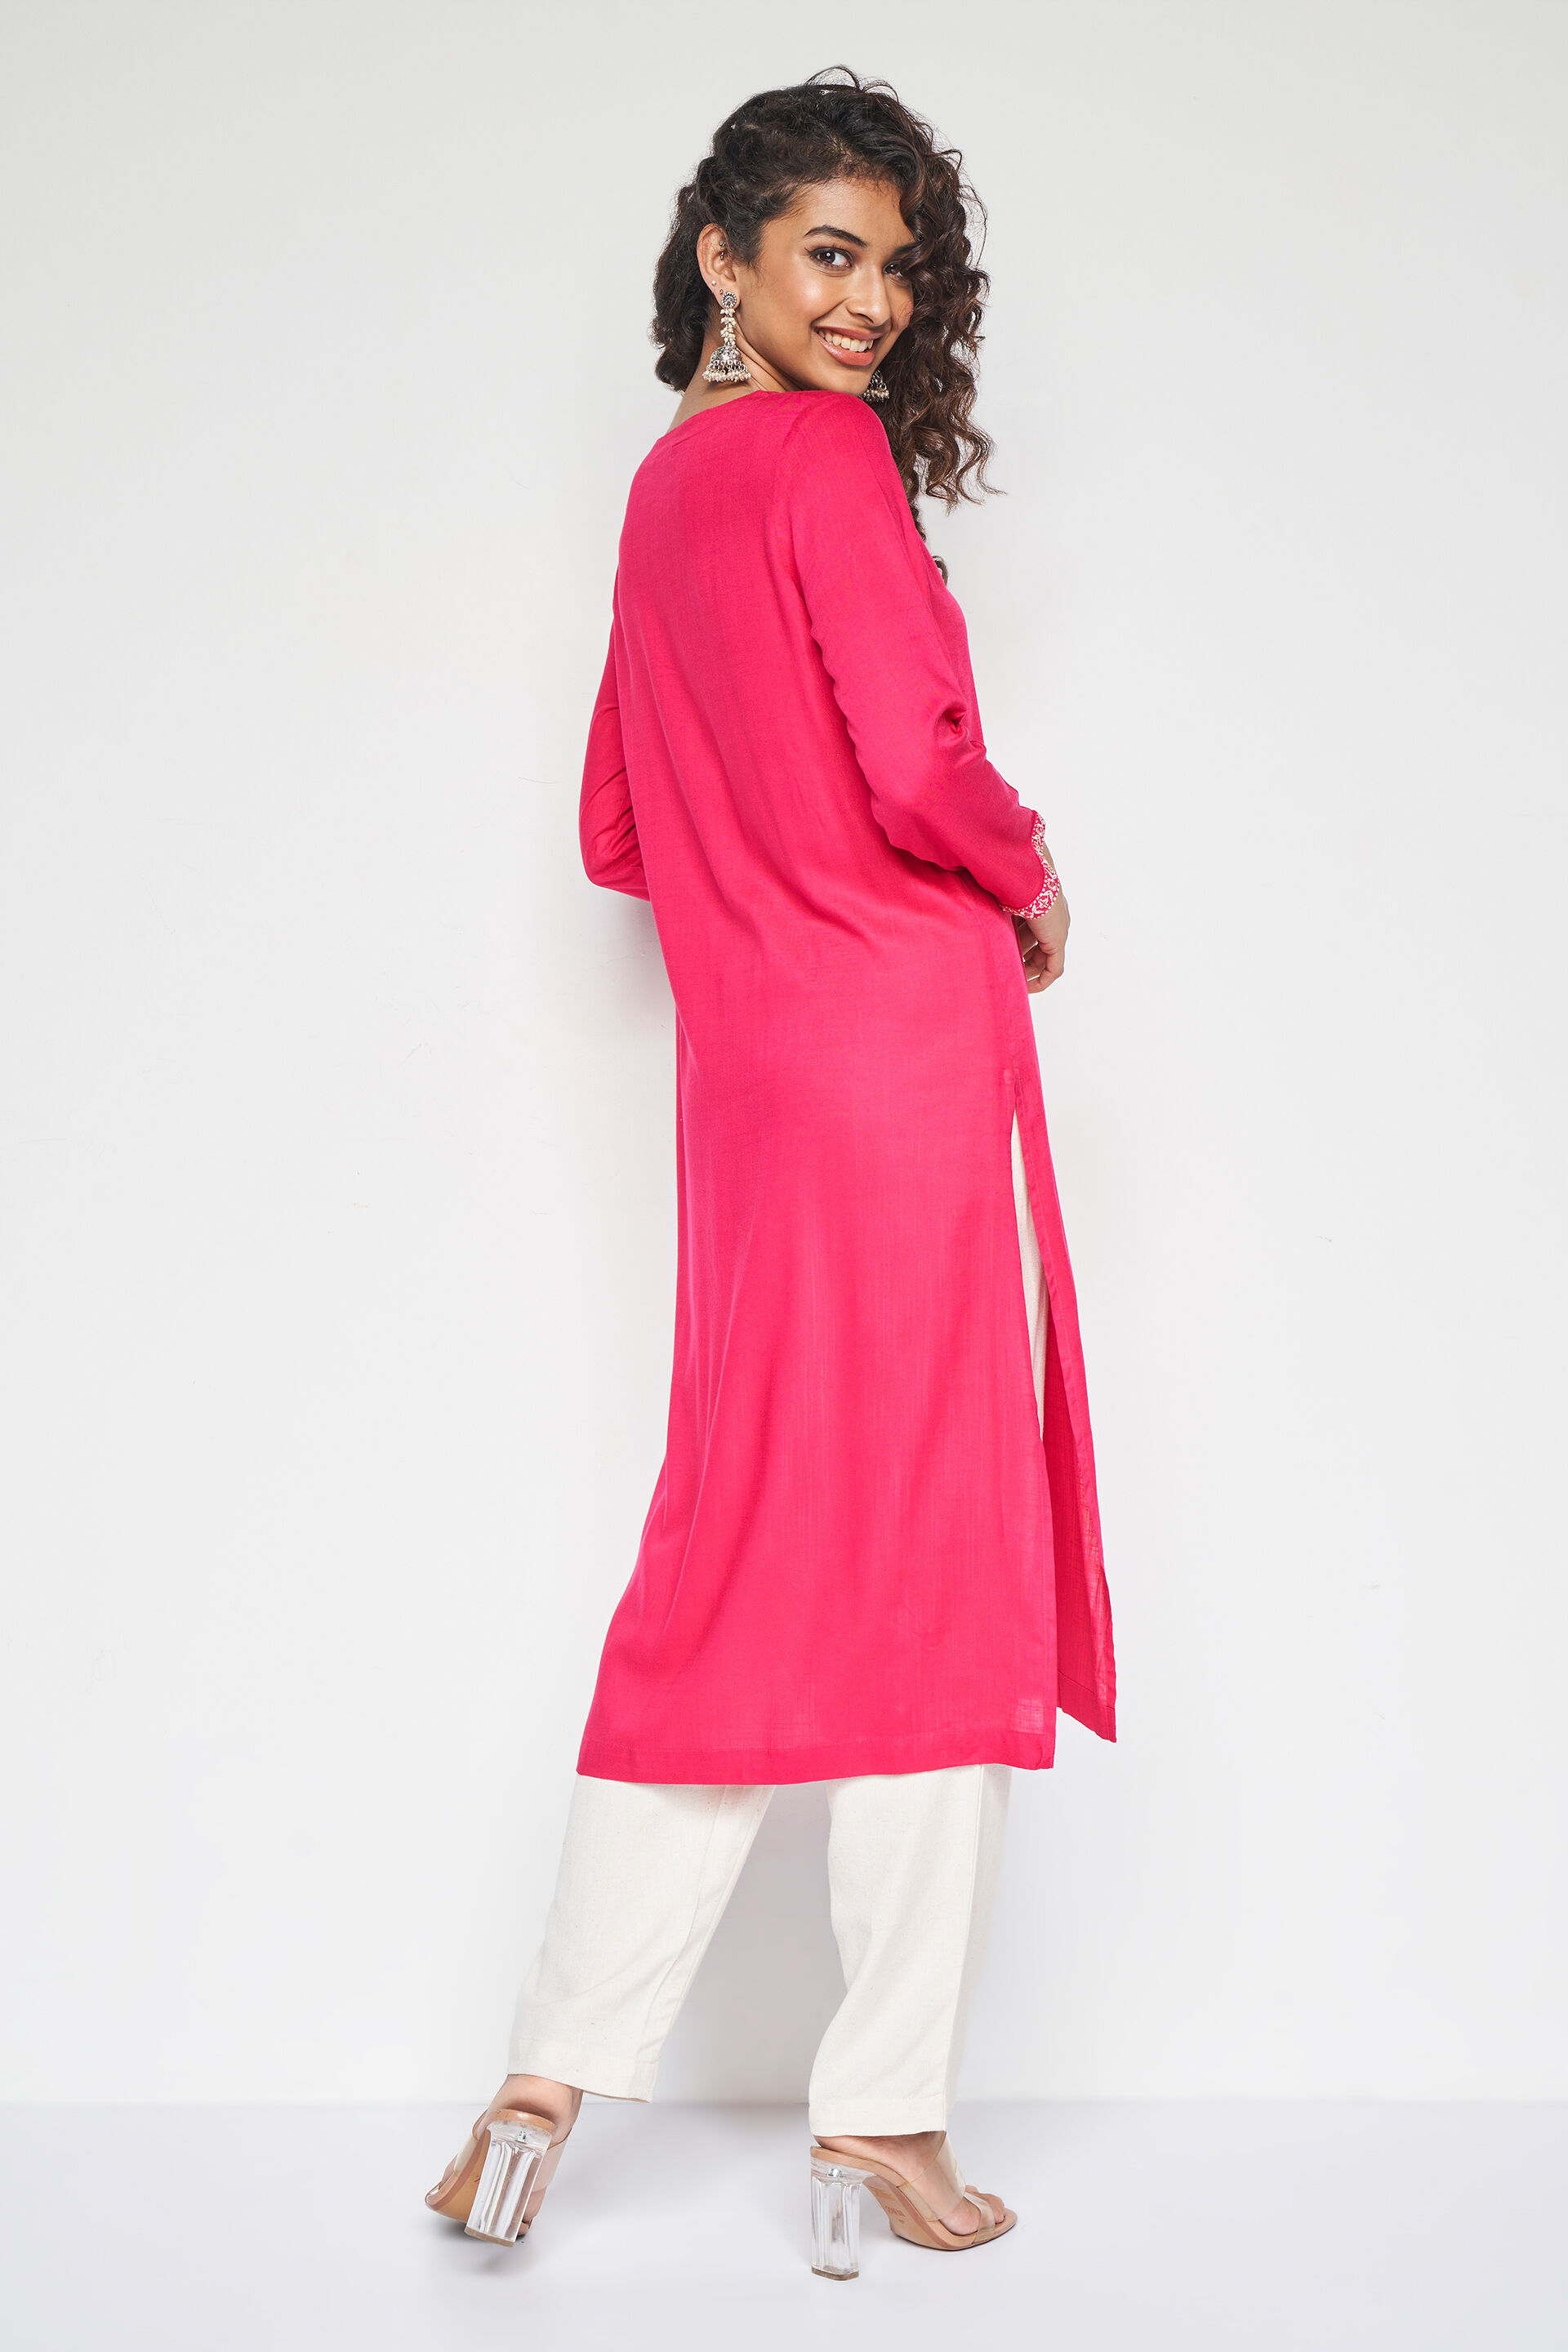 Palazzo lehenga with off shoulder suit in Fuchsia Pink - Elwa Saleh | Saree  wearing styles, Off shoulder kurti, Gharara designs